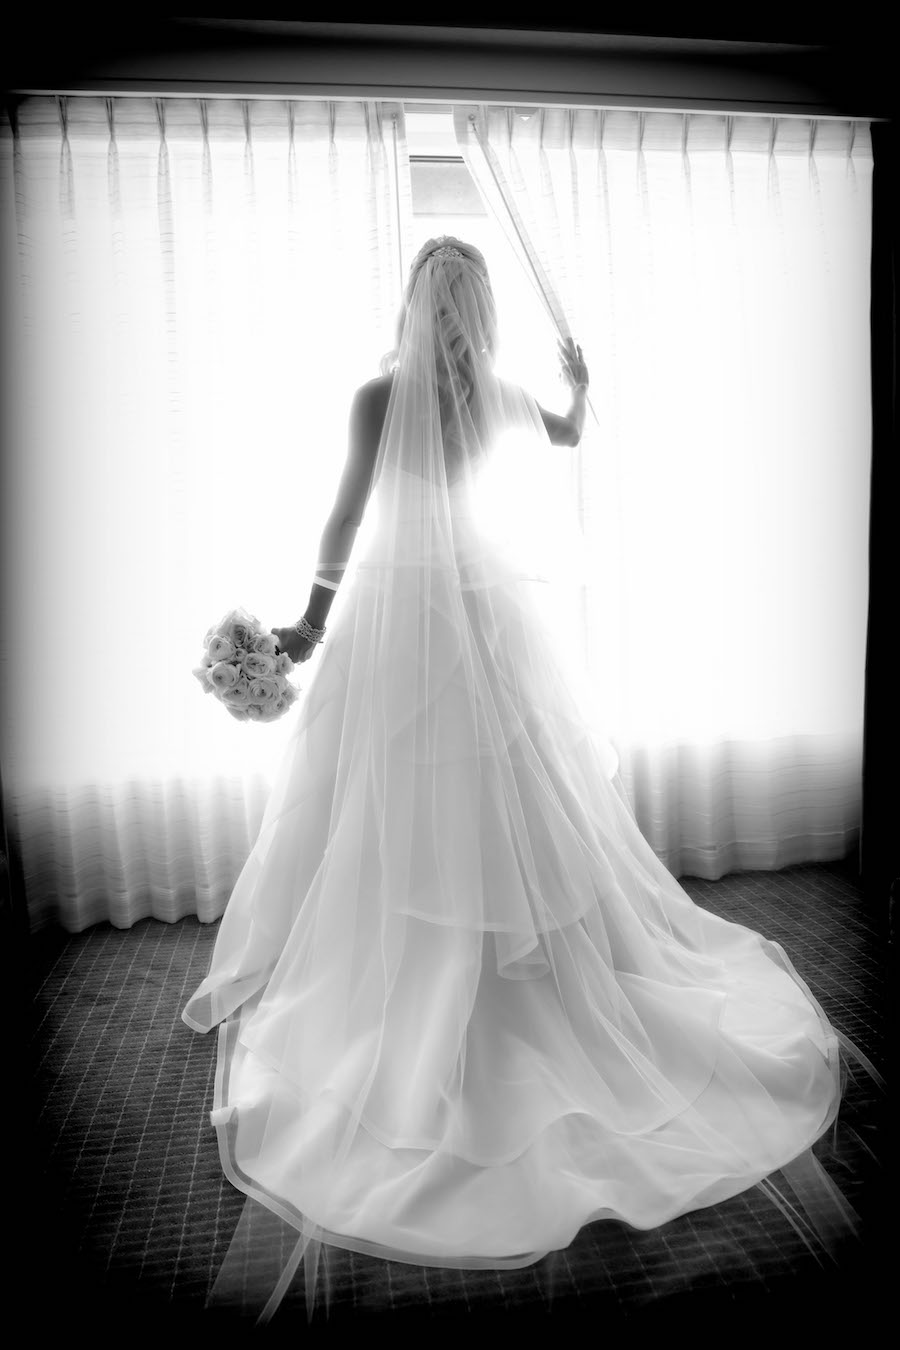 Bridal Wedding Portrait in Ivory Mikaella Wedding Dress and Chapel Length Veil